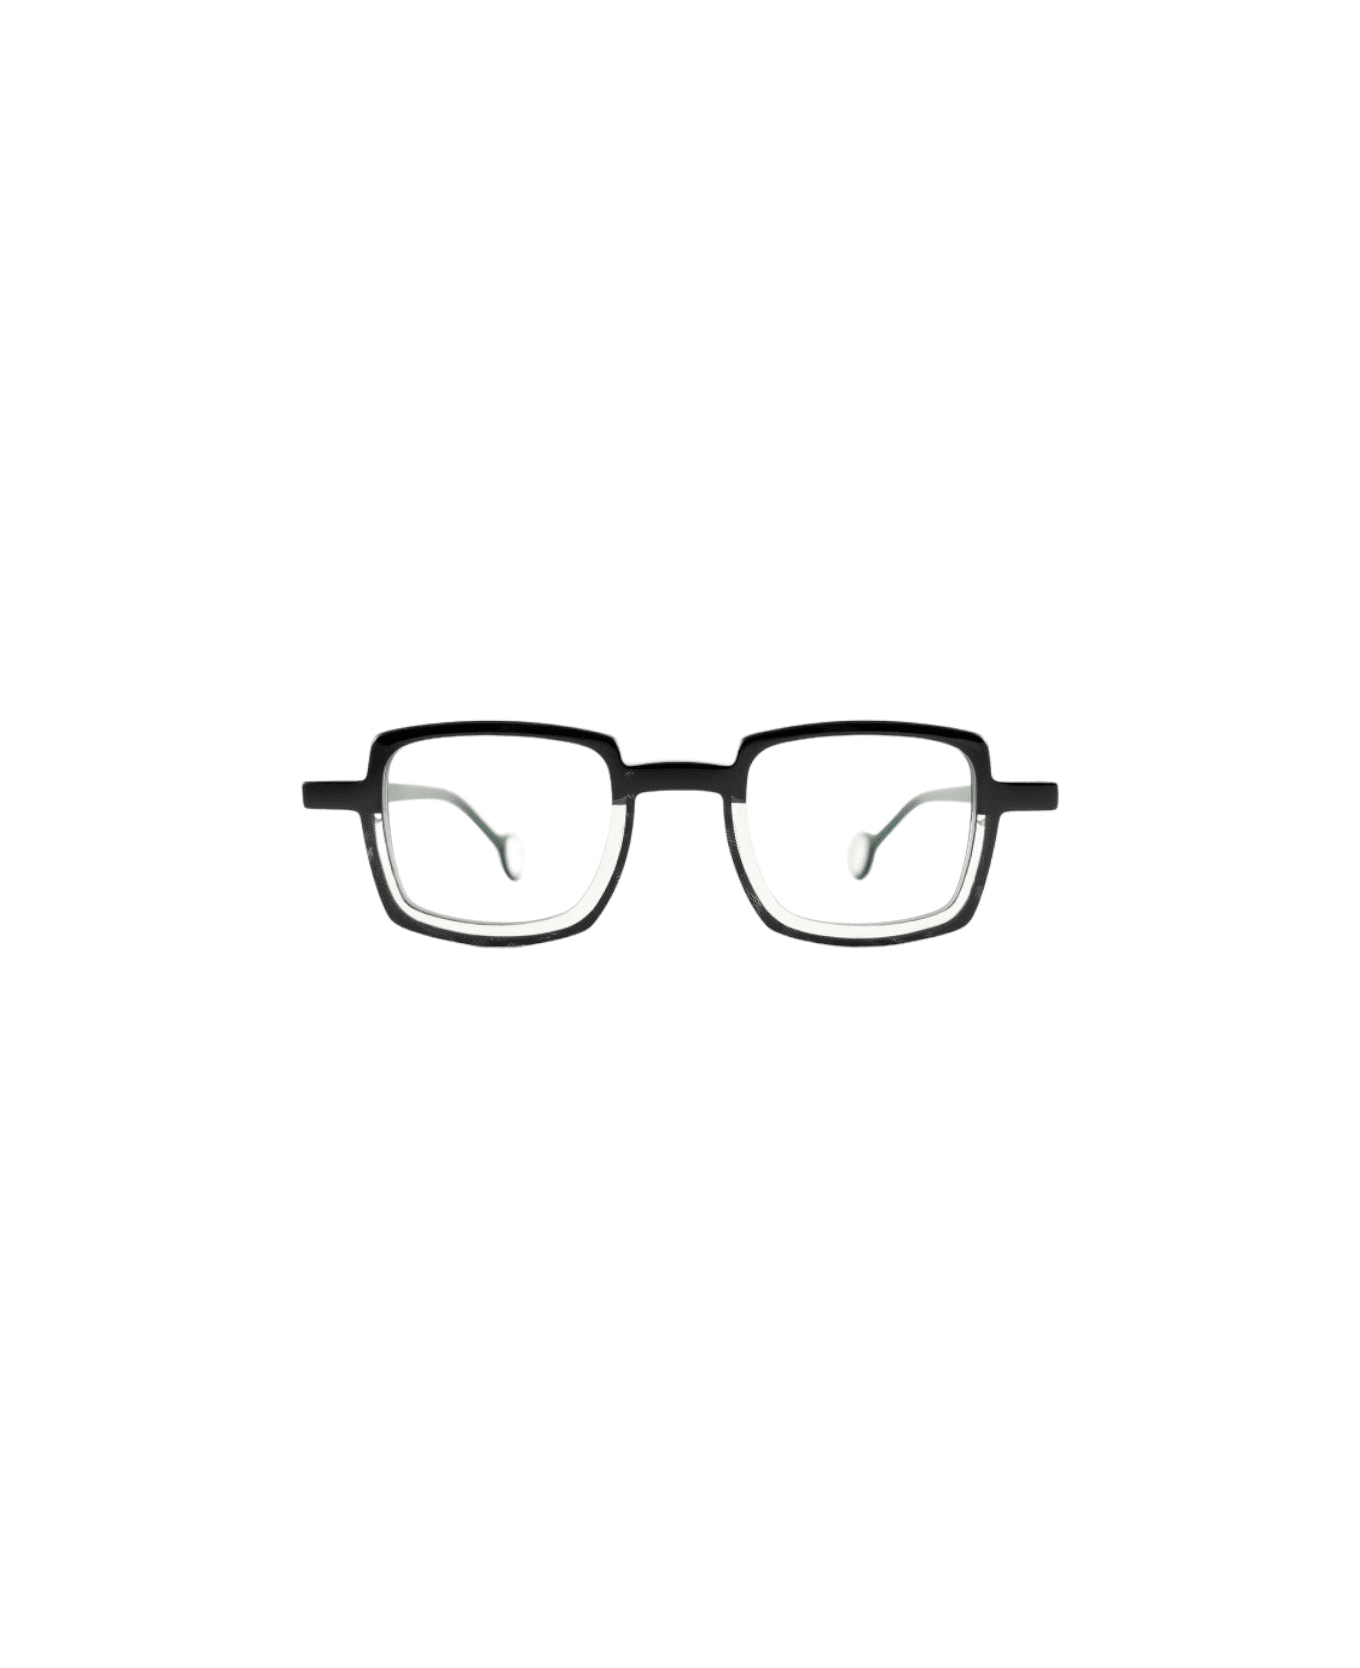 Theo Schaukel - Black Glasses